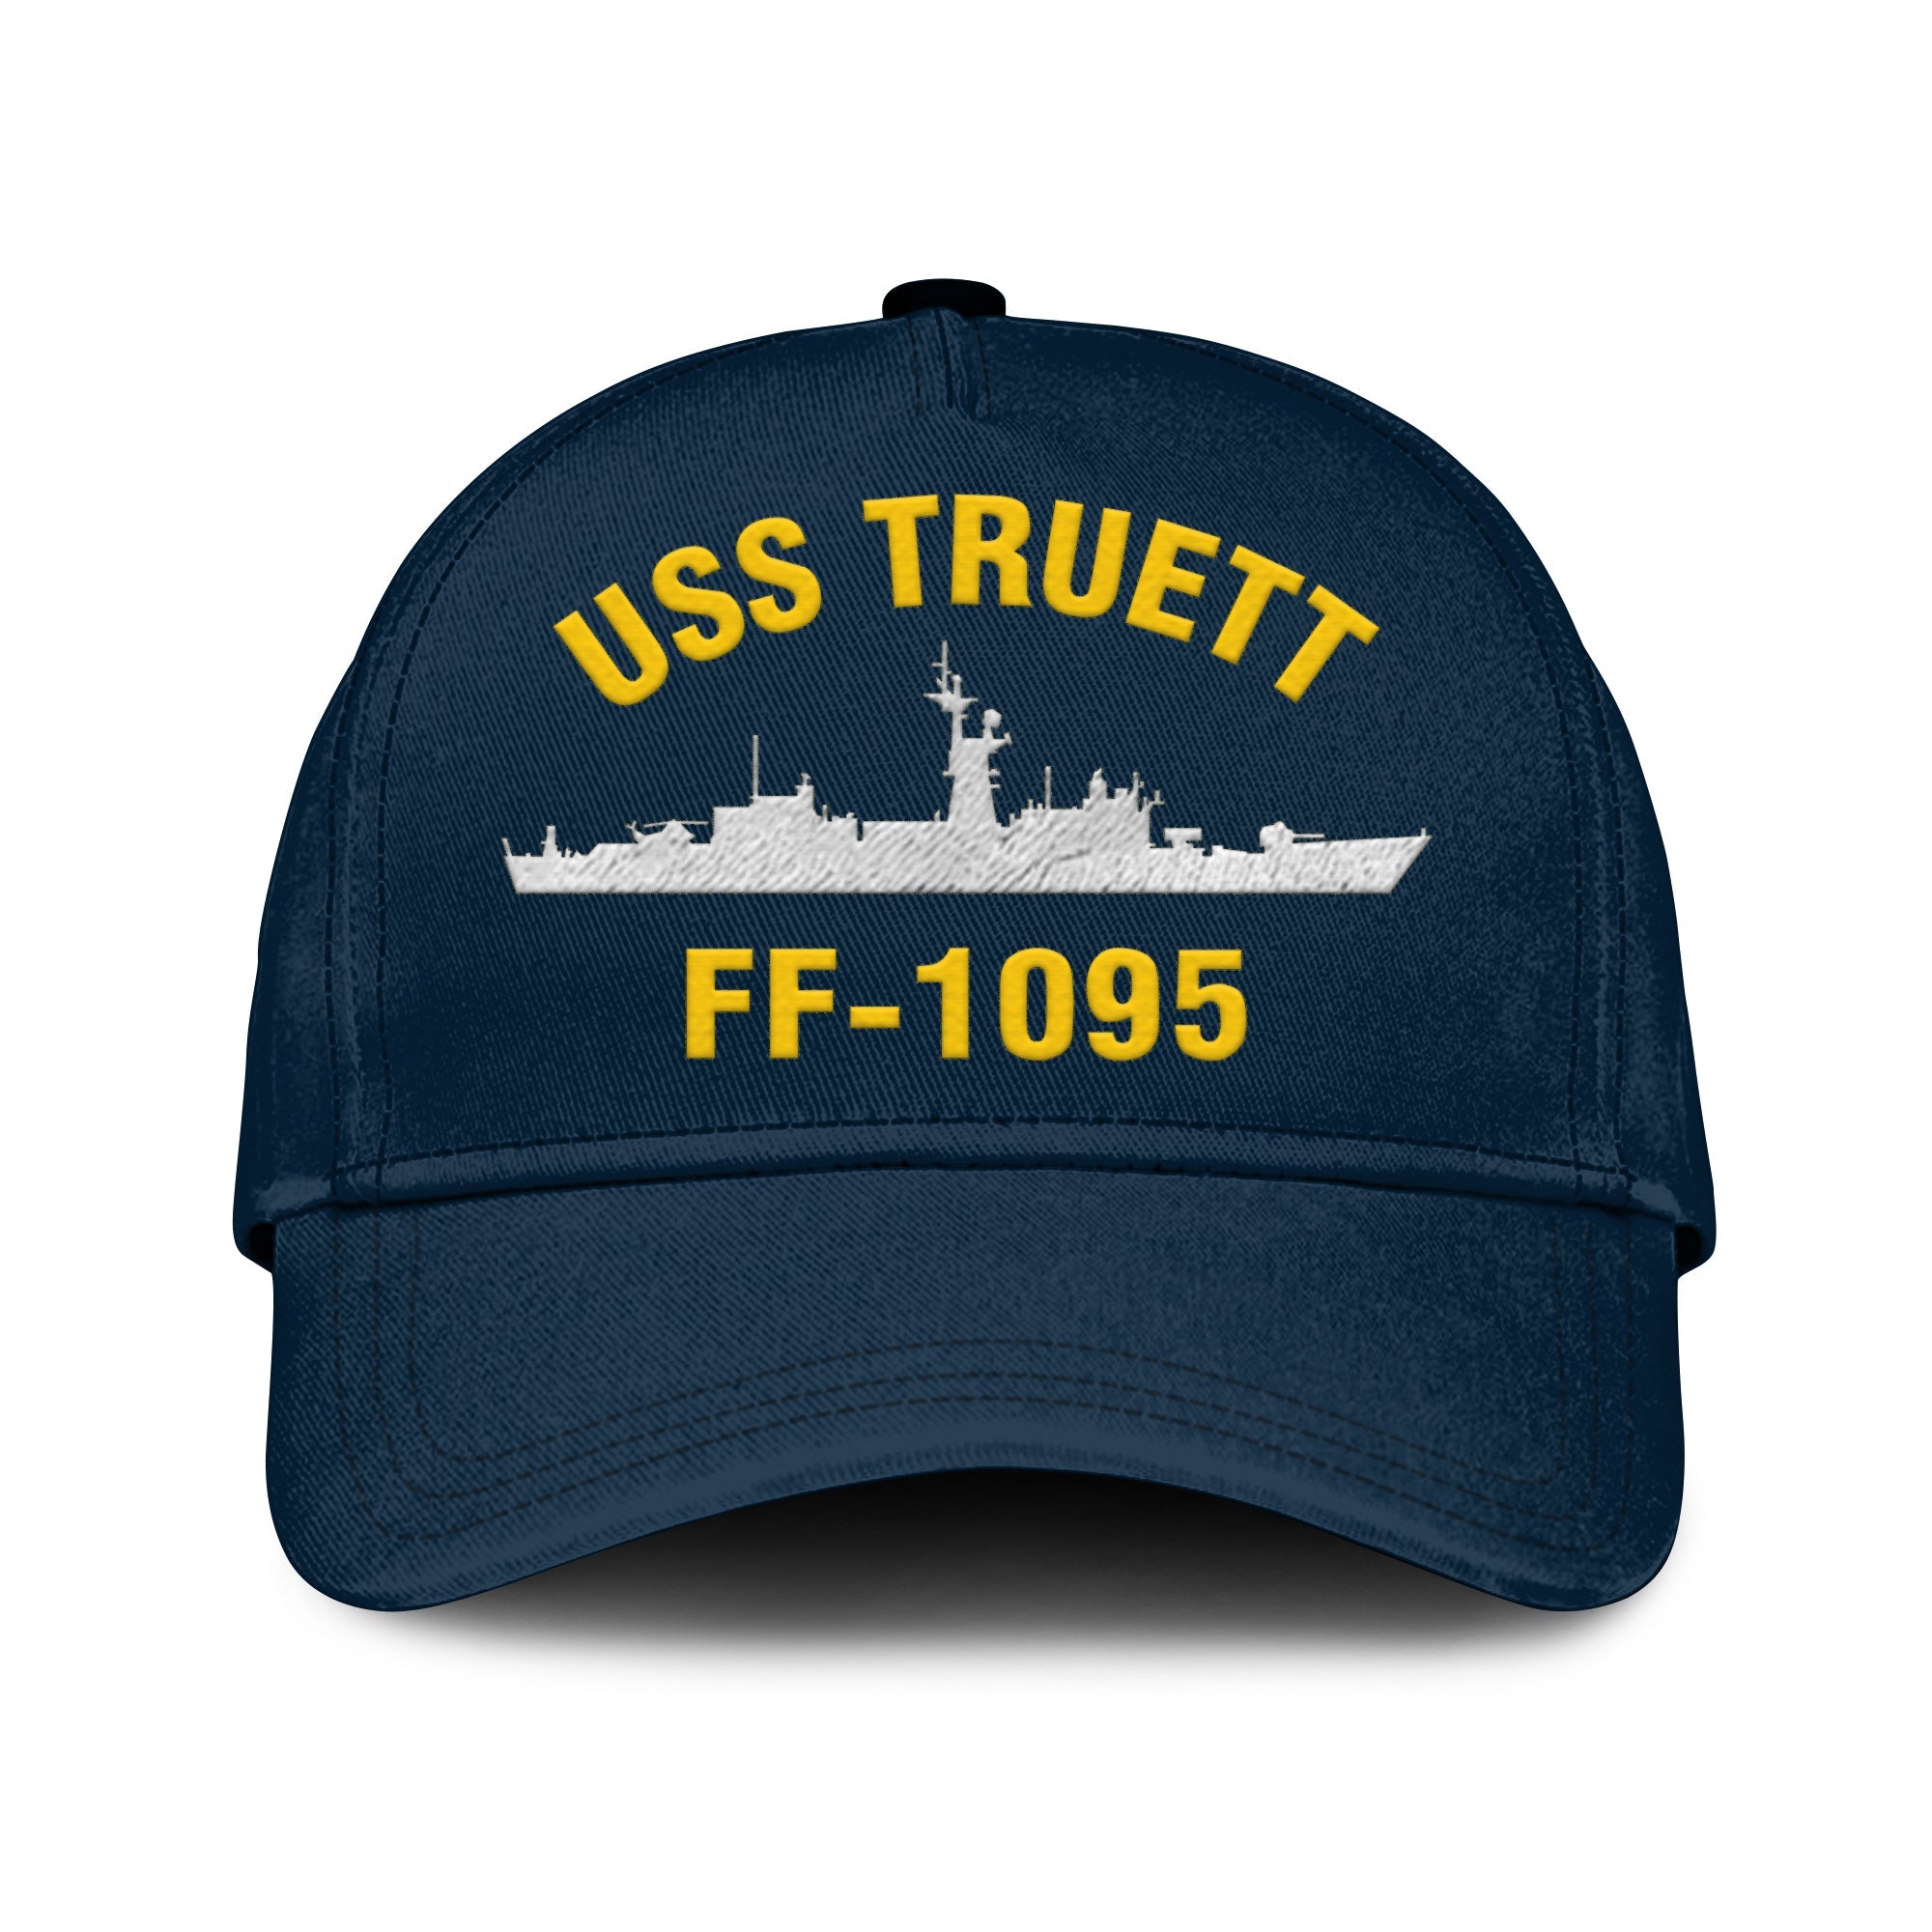 Uss Truett Ff-1095 Classic Cap, Custom Print/embroidered Us Navy Ships Classic Baseball Cap, Gift For Navy Veteran